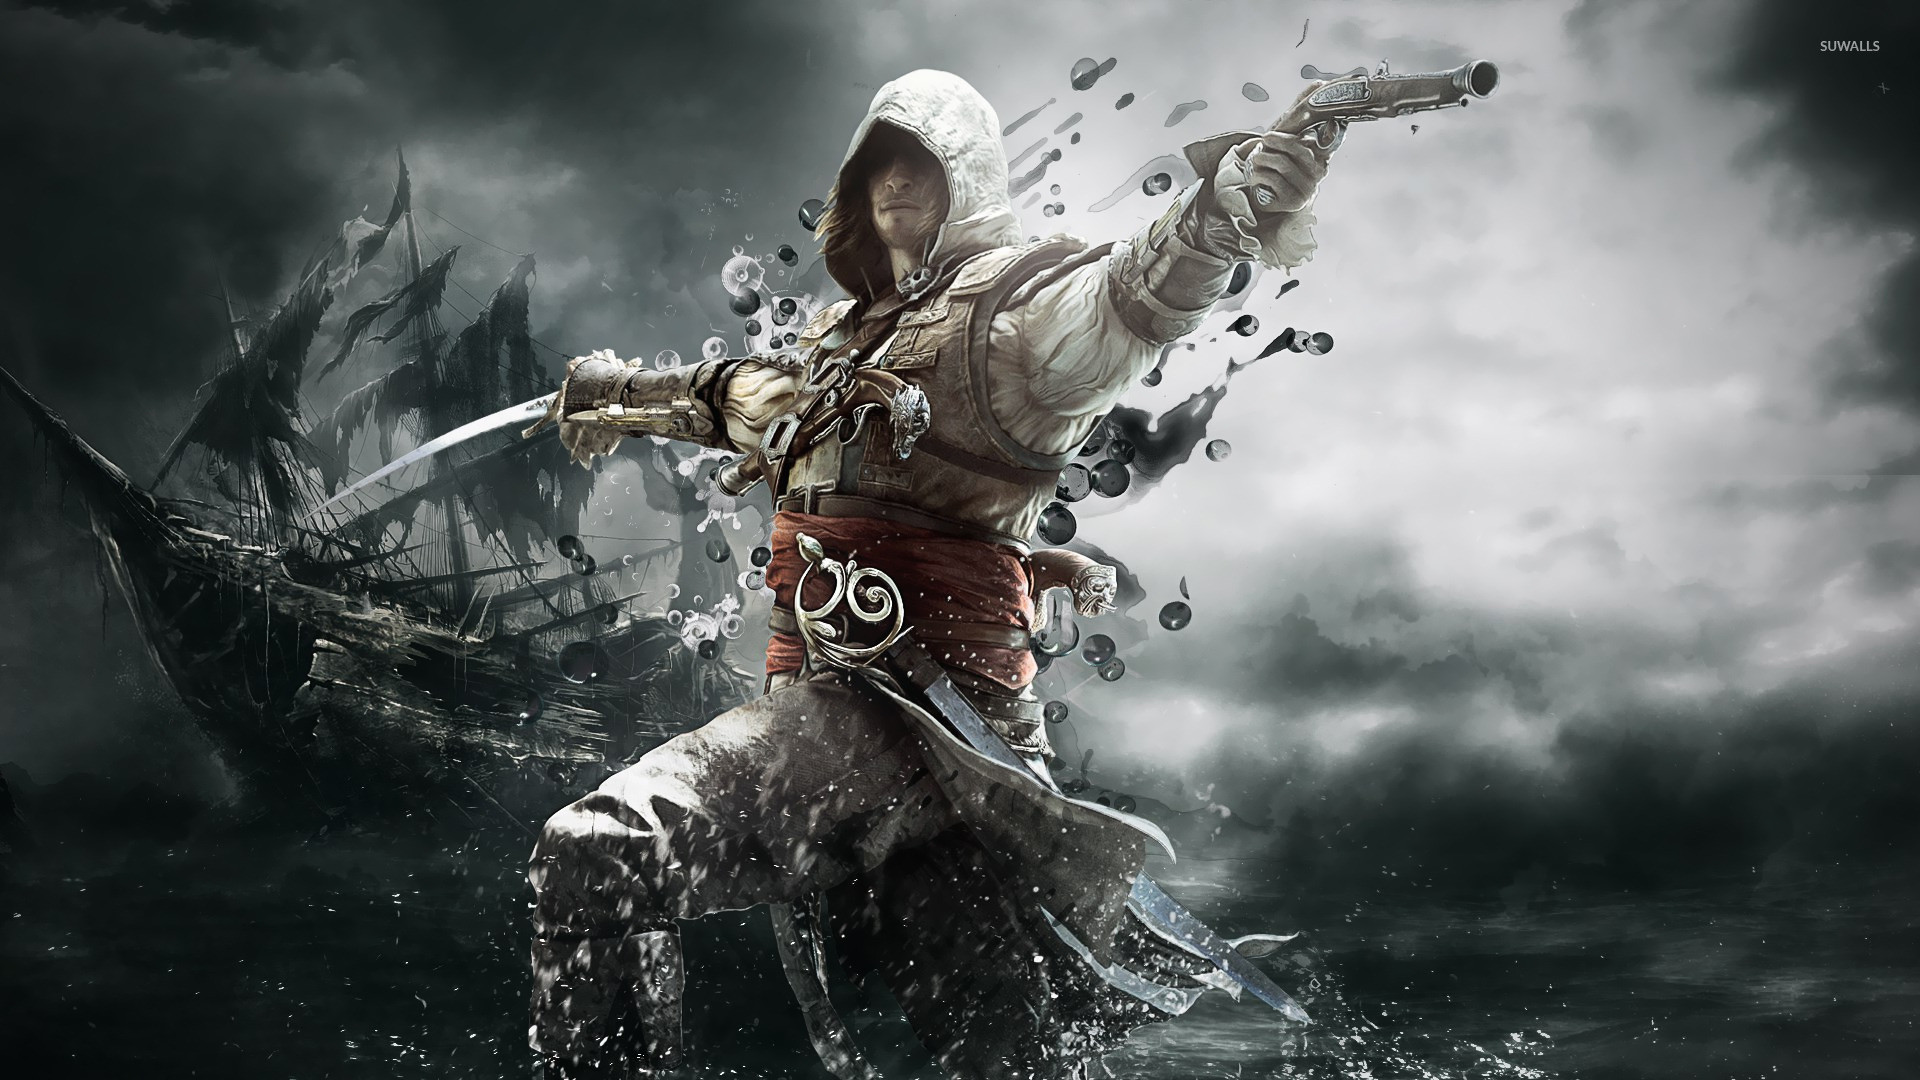 1920x1080 Edward Kenway - Assassin's Creed IV: Black Flag [2] wallpaper  jpg